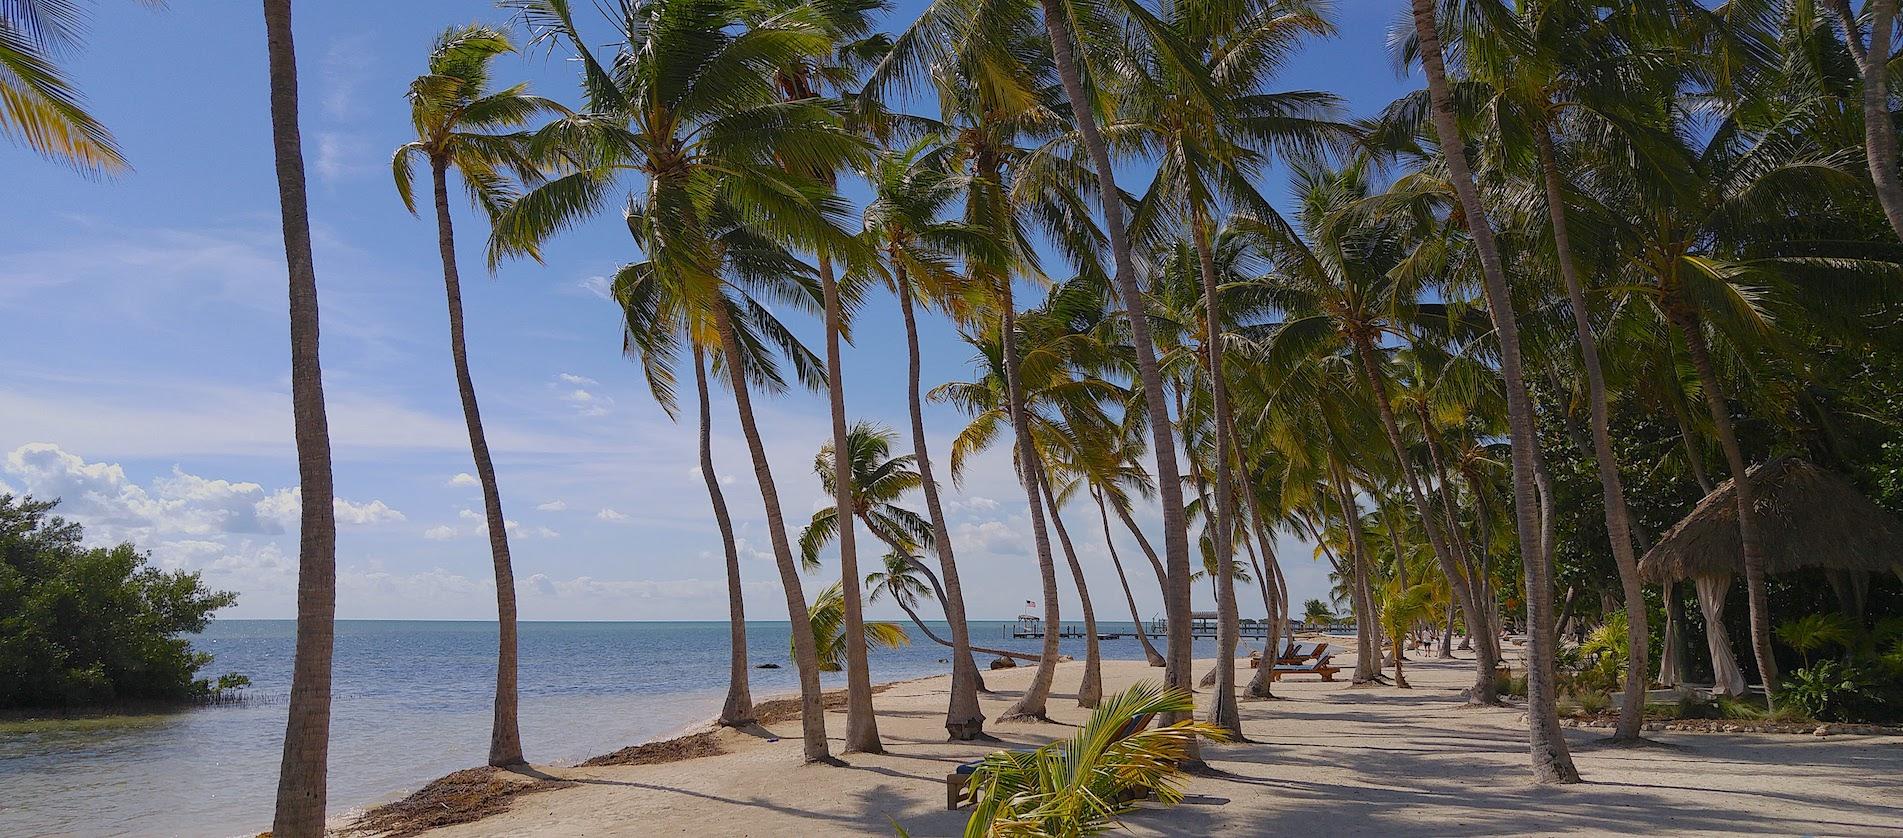 Islamorada, Florida Keys - view of palm trees swaying in the breeze